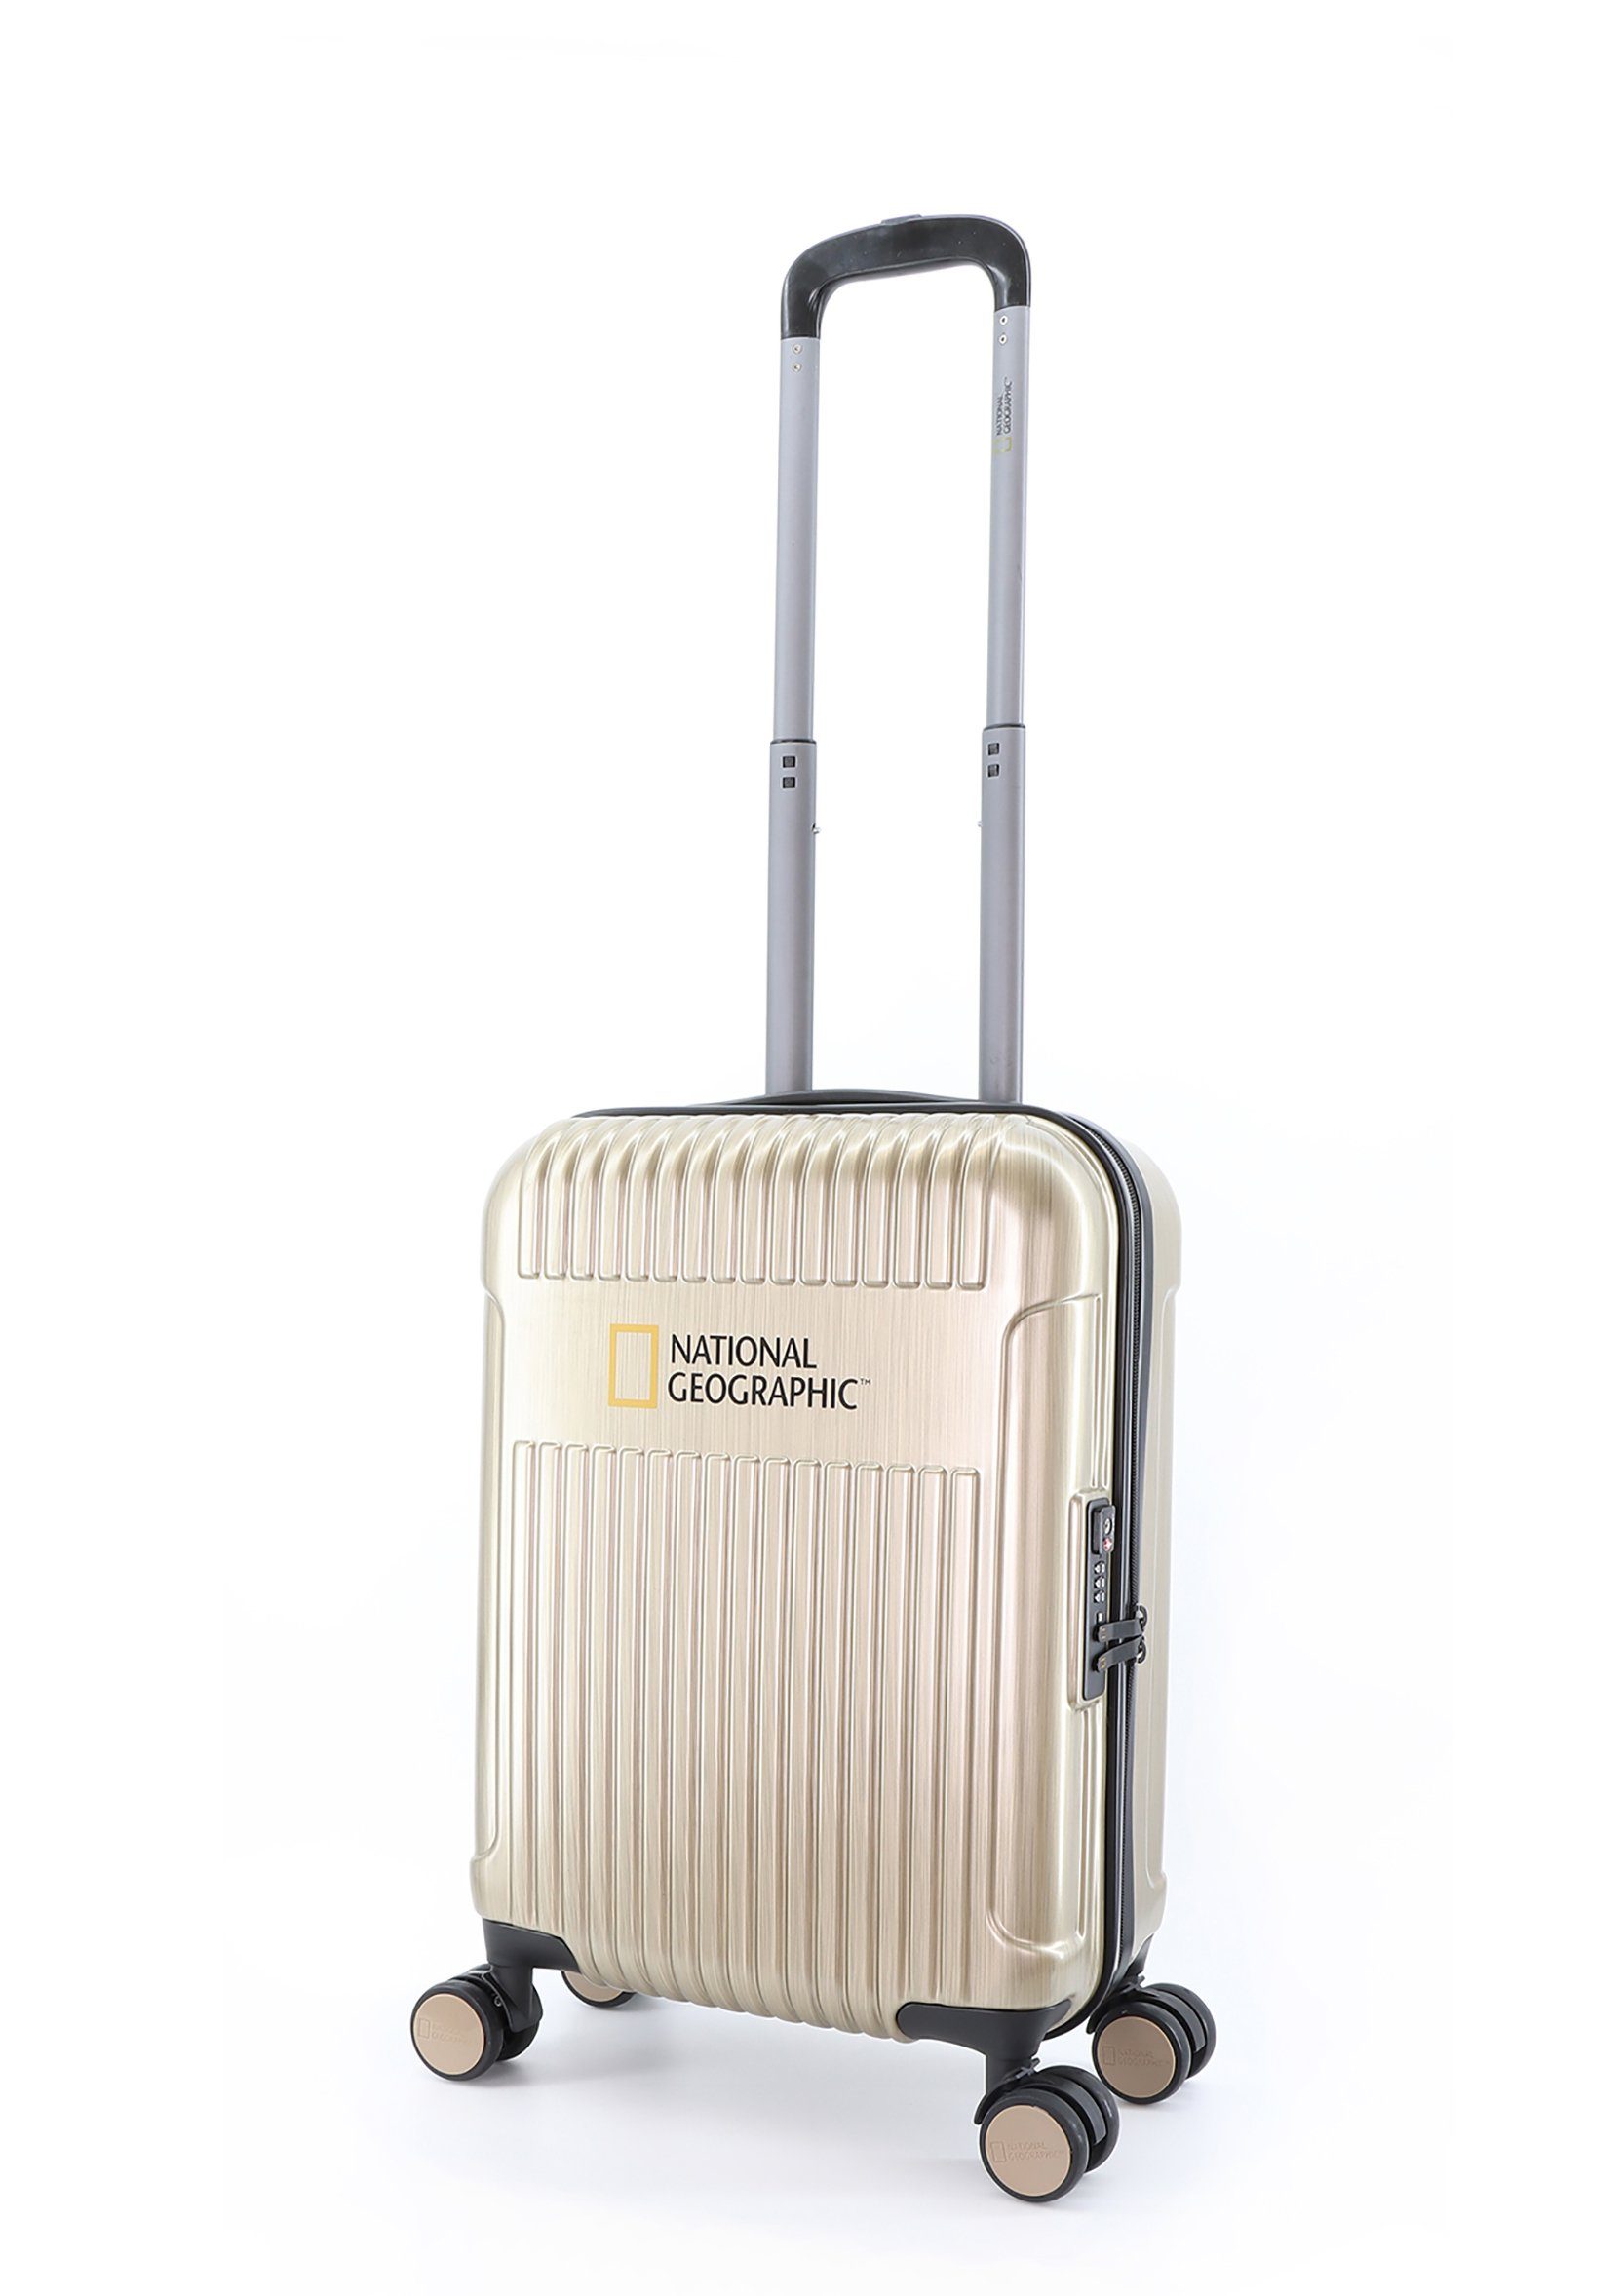 NATIONAL GEOGRAPHIC Koffer Transit, 8 Rollen, mit sicherem TSA-Zahlenschloss